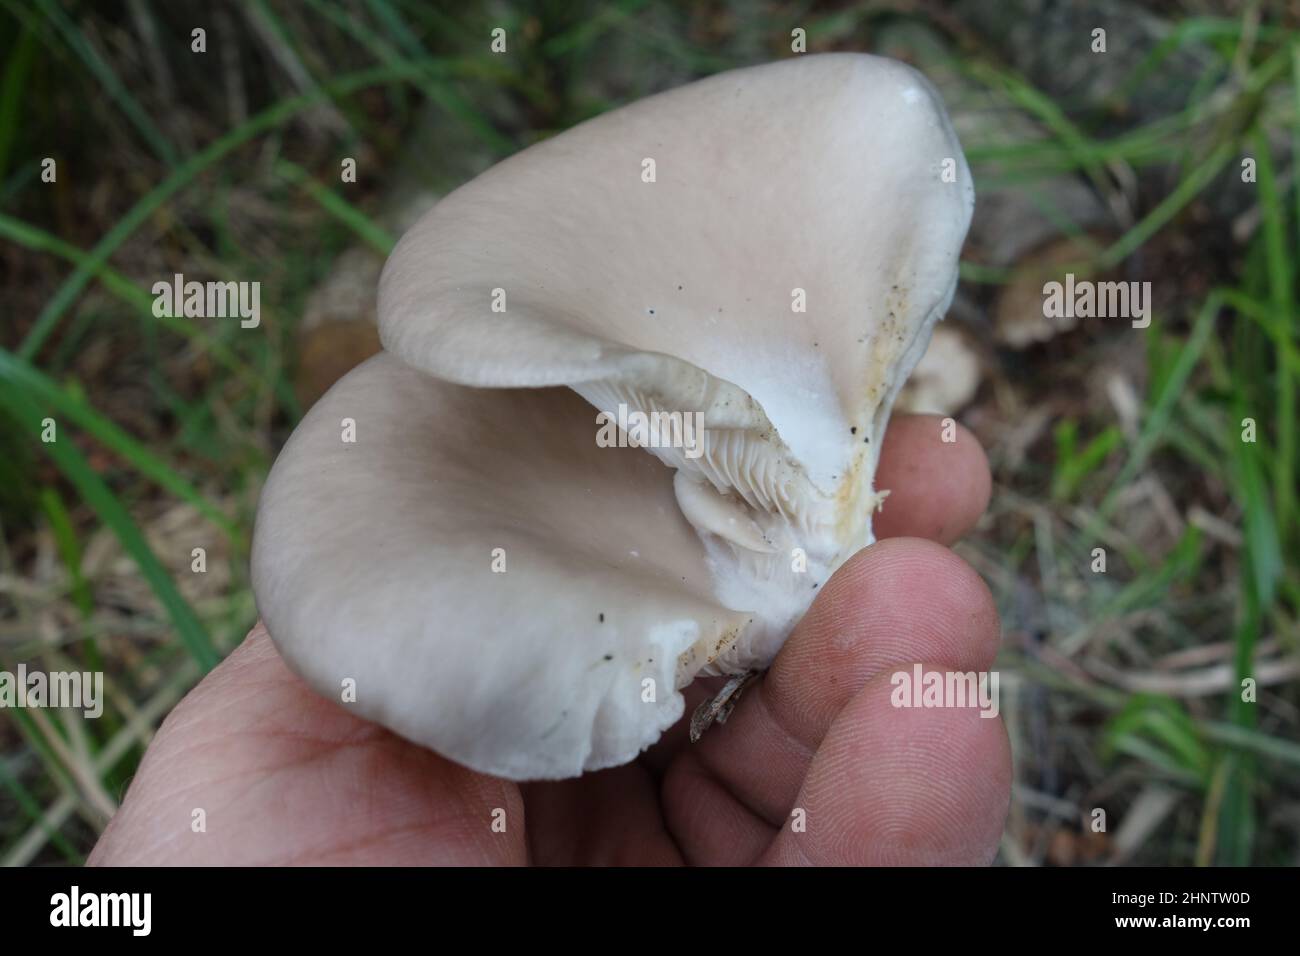 oyster mushroom or tree mushroom (Pleurotus) a cultivated edible fungi Stock Photo